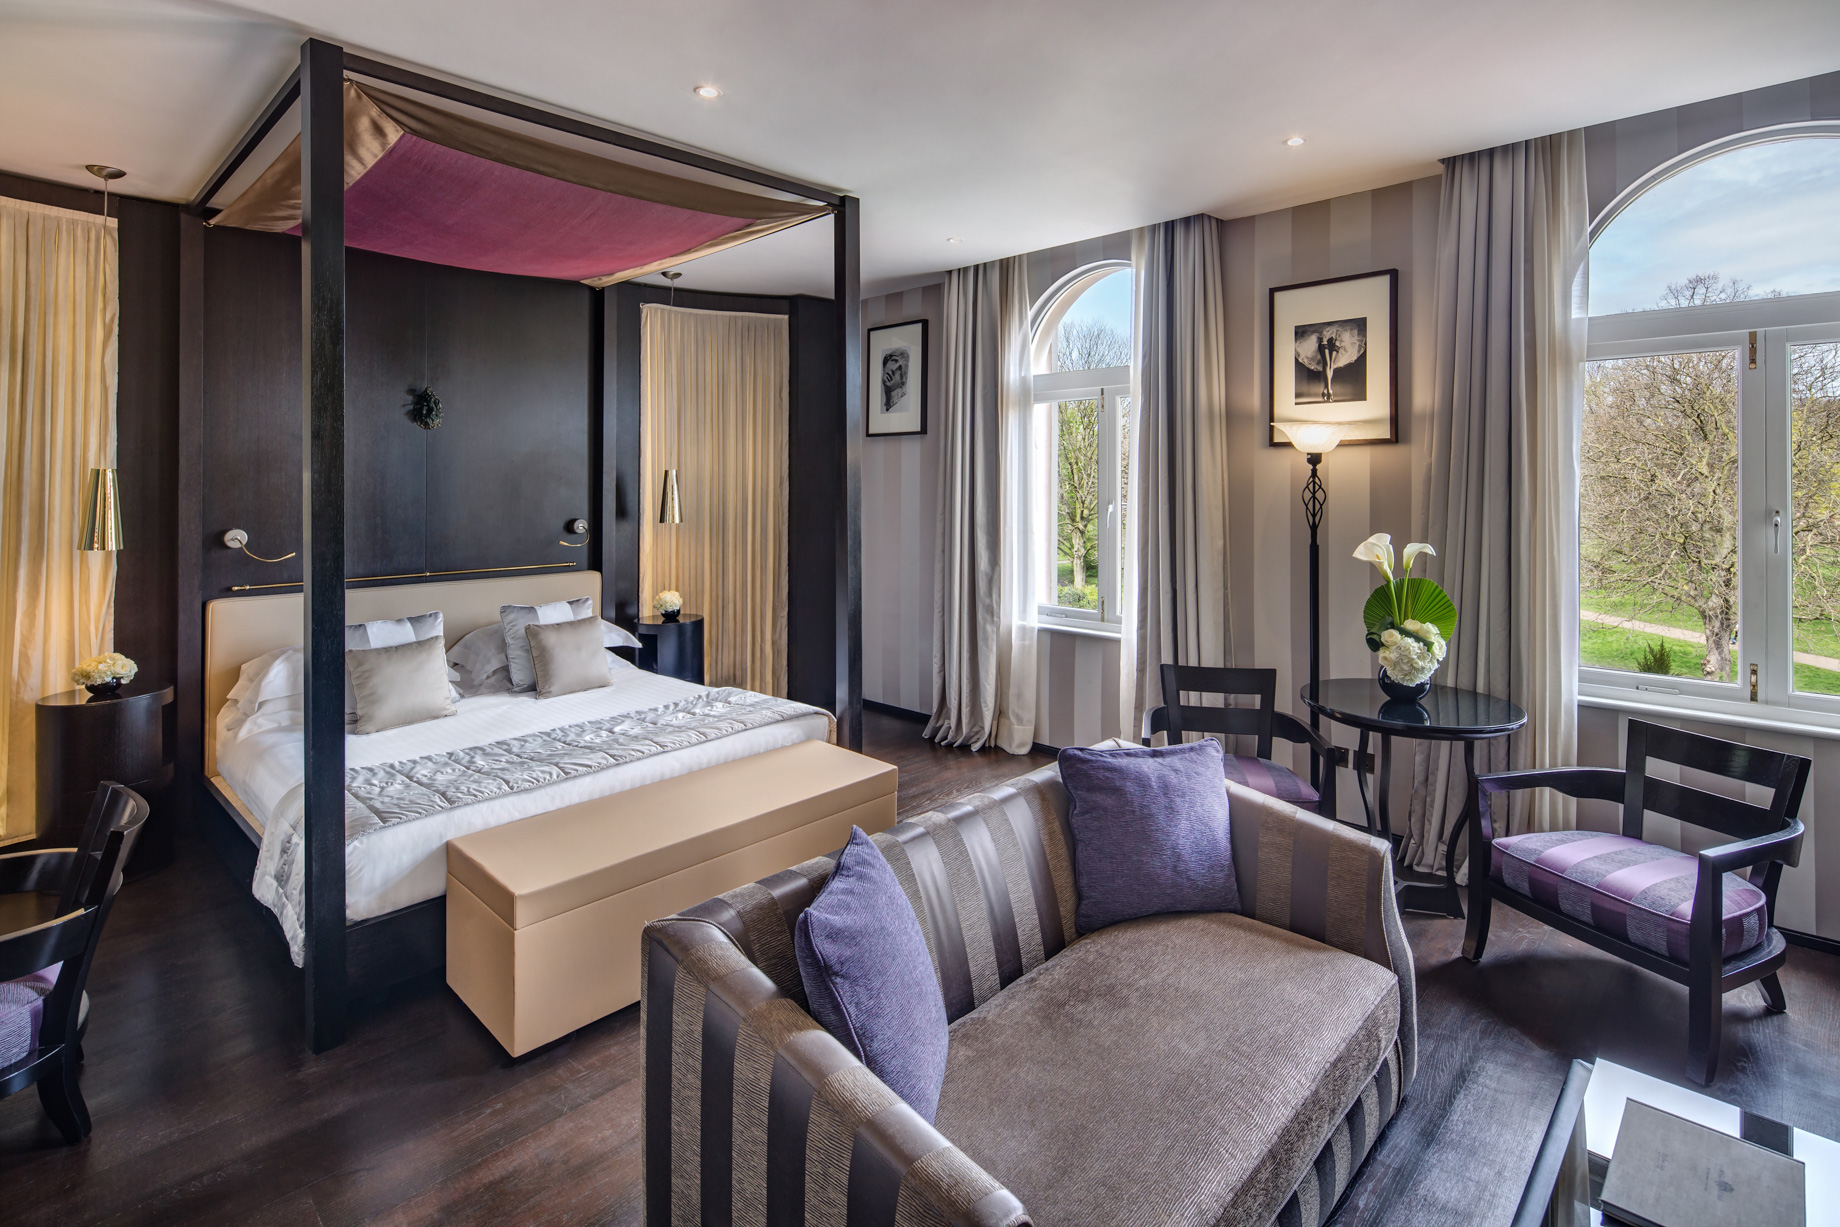 Baglioni Hotel London – South Kensington, London, United Kingdom – Executive Junior Suite